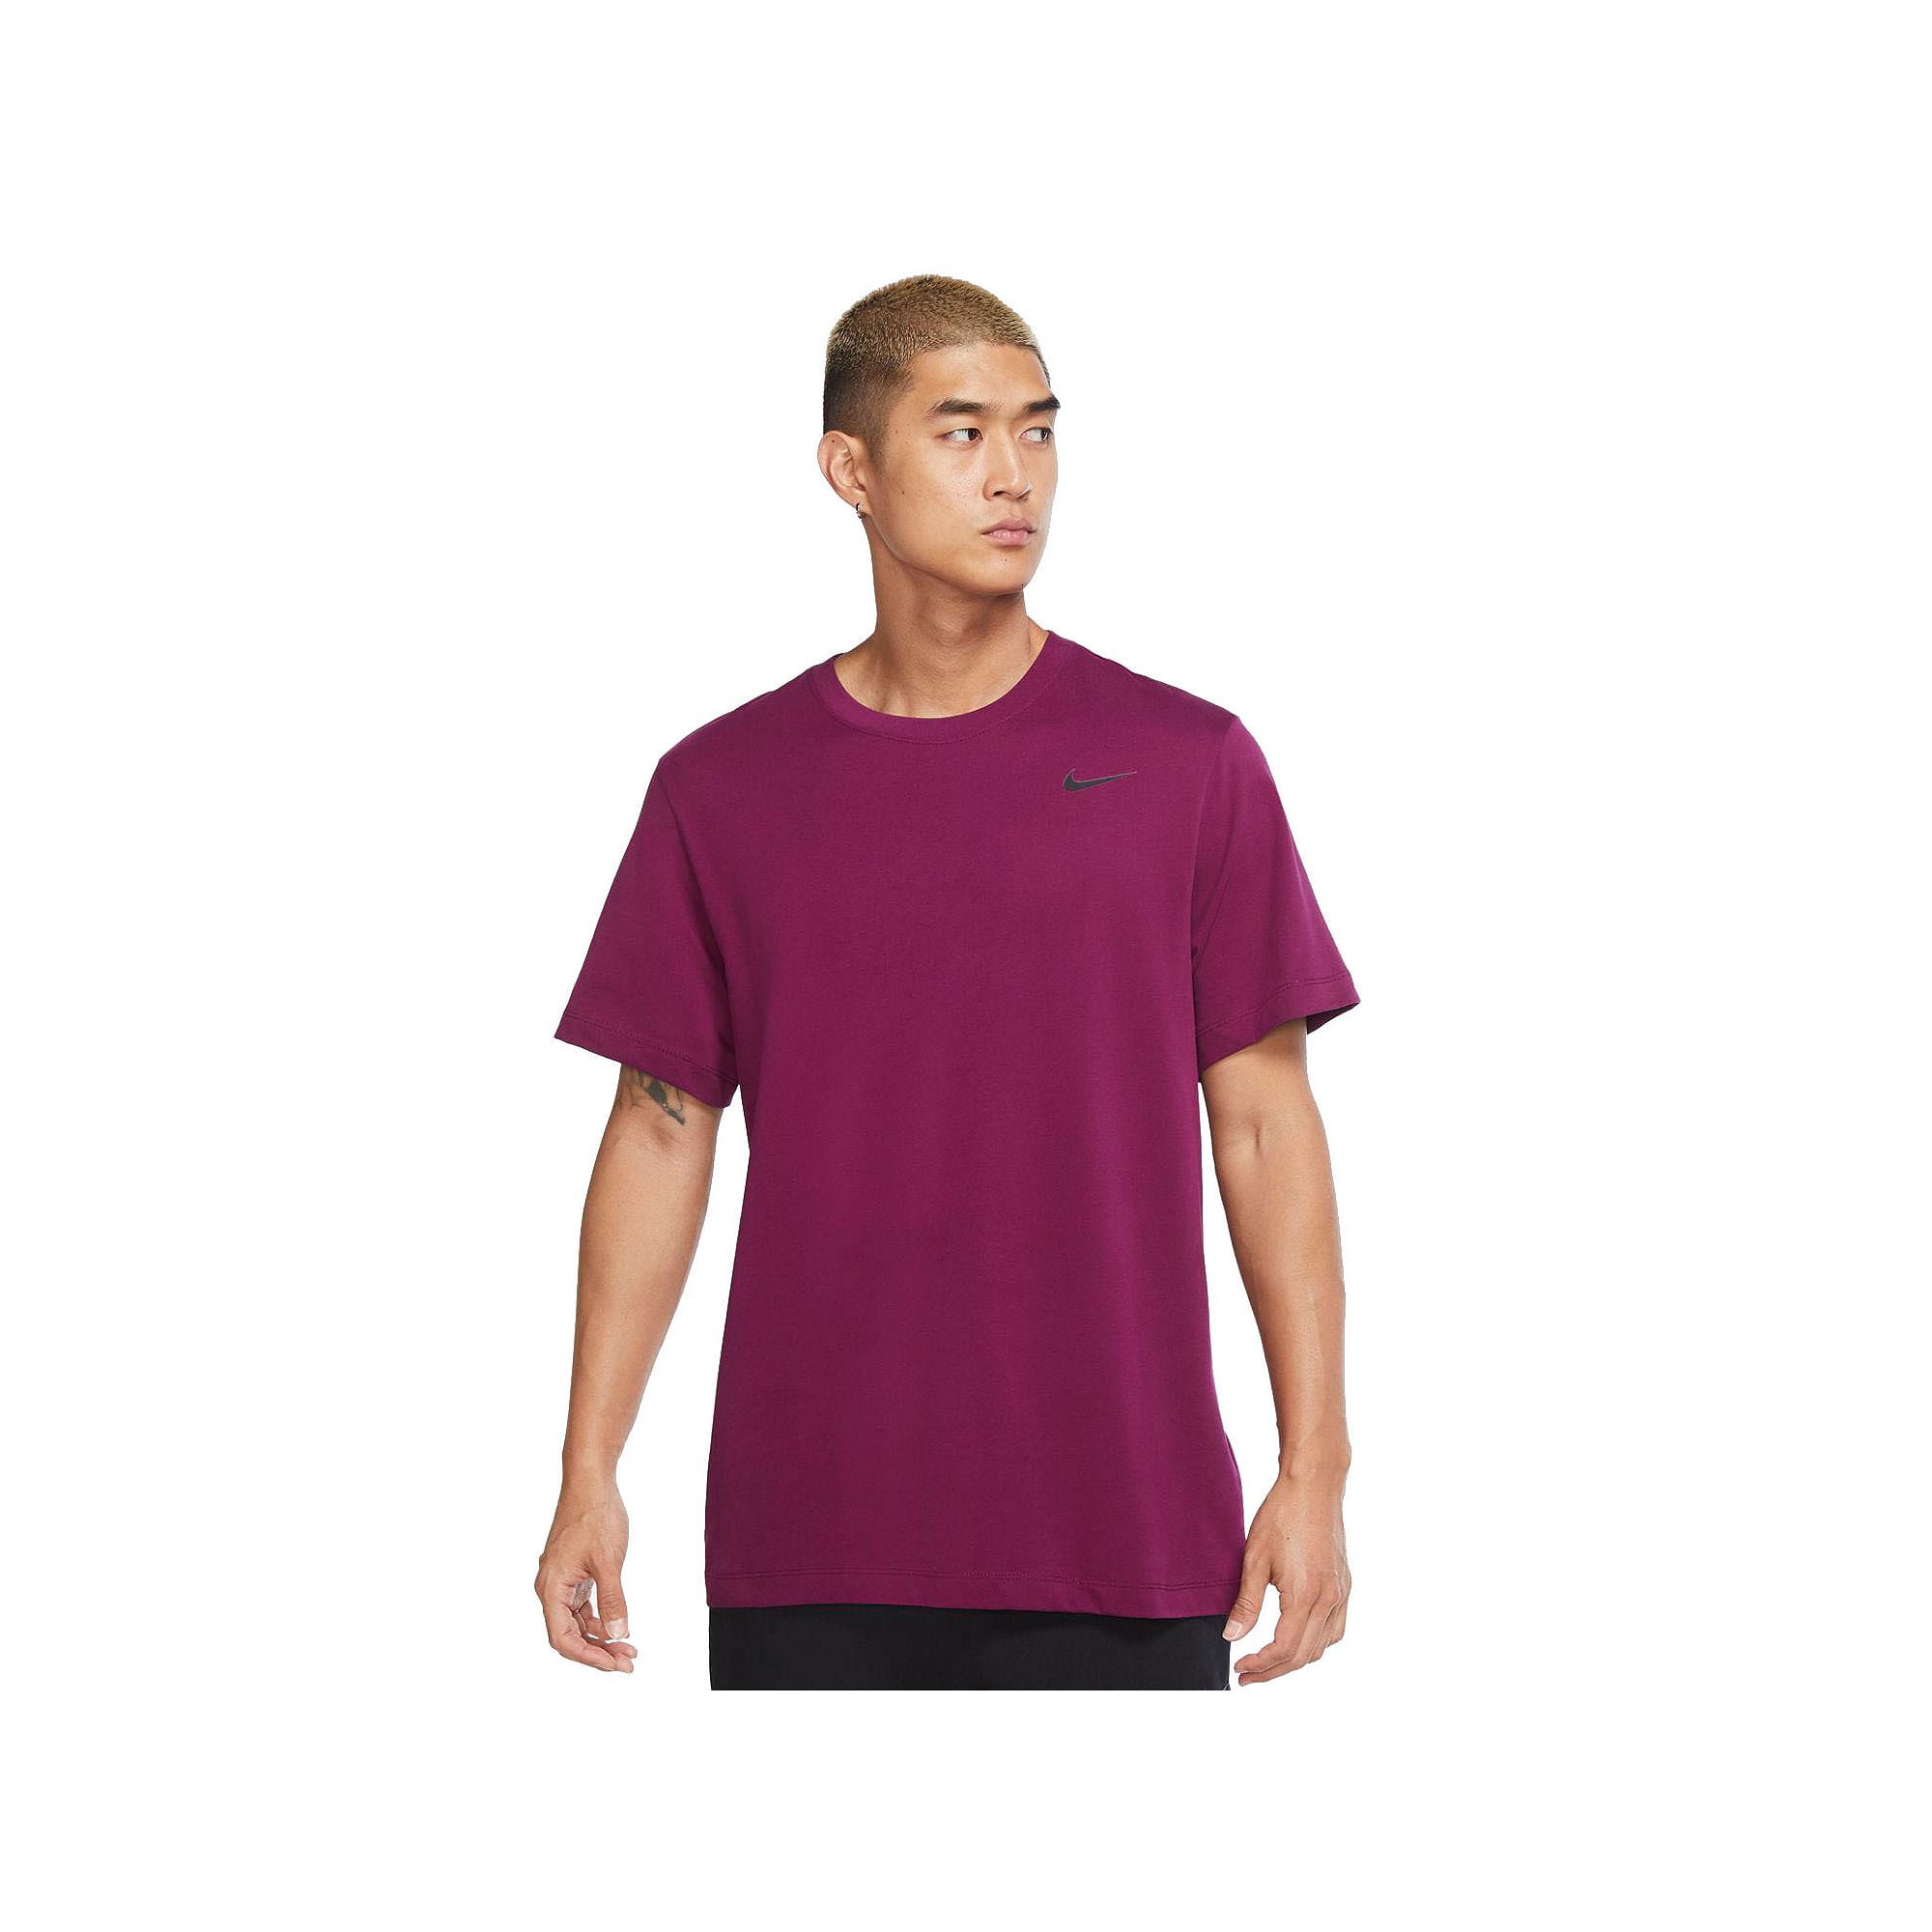 Nike Dri-FIT Men's Fitness T-Shirt, Sangria, M -